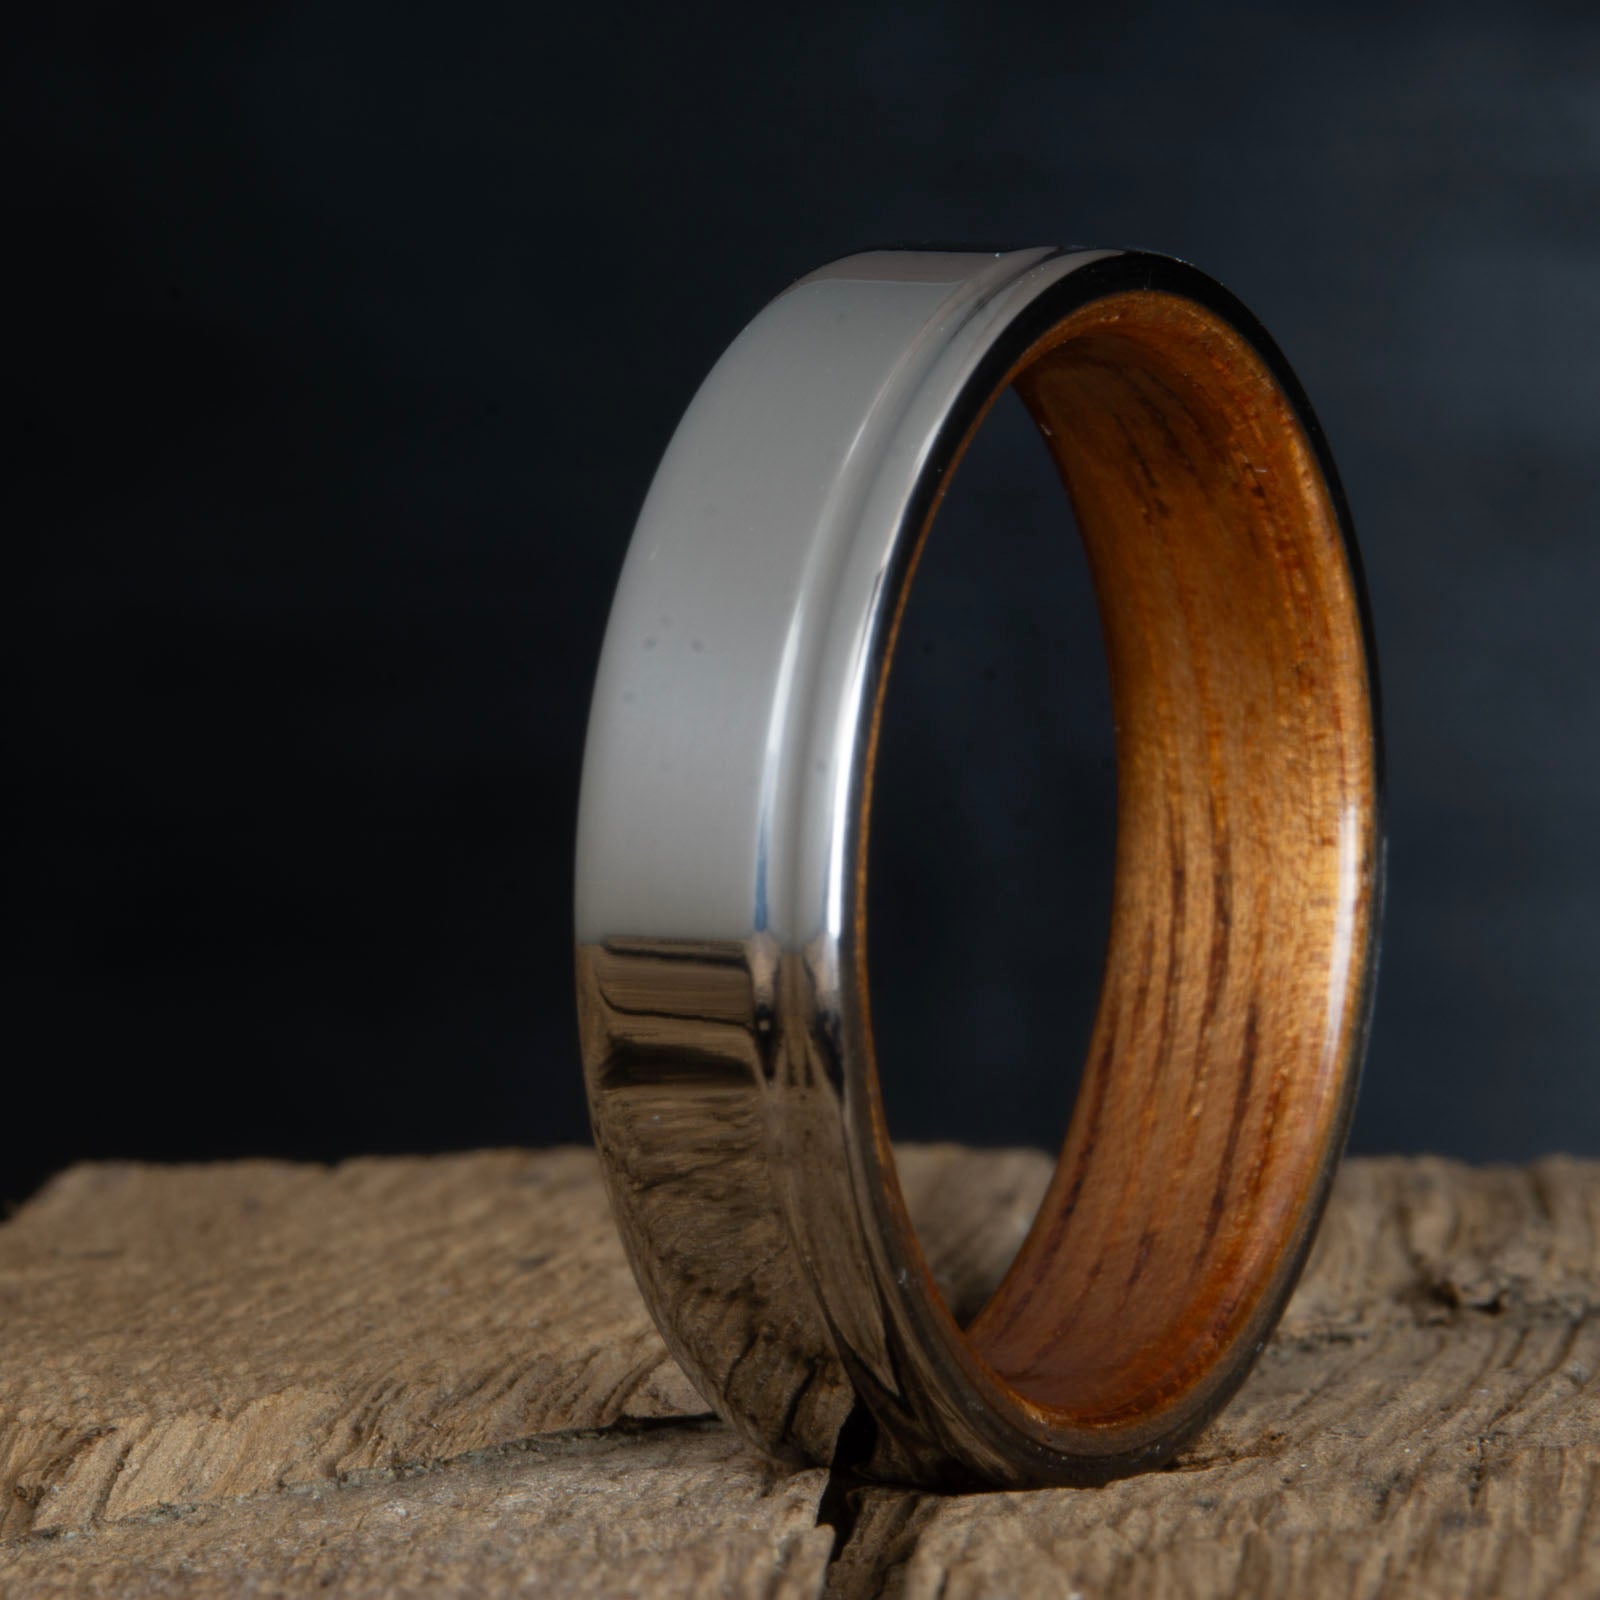 titanium koa wood ring- single groove polished titanium wood ring with koa